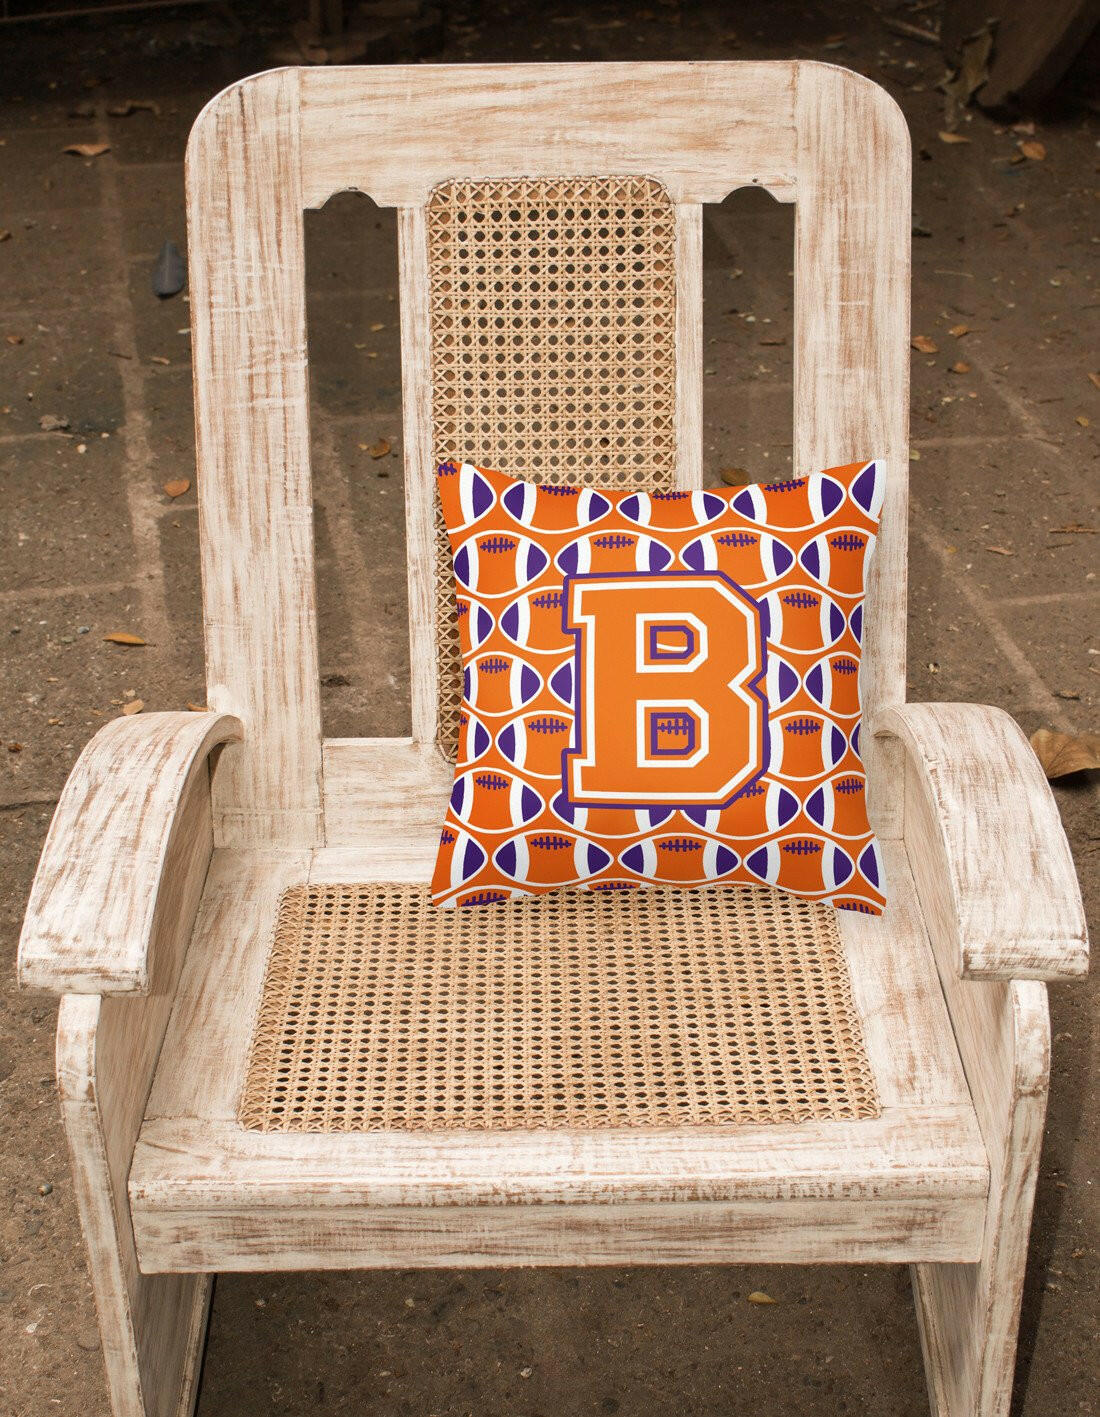 Letter B Football Orange, White and Regalia Fabric Decorative Pillow CJ1072-BPW1414 by Caroline's Treasures